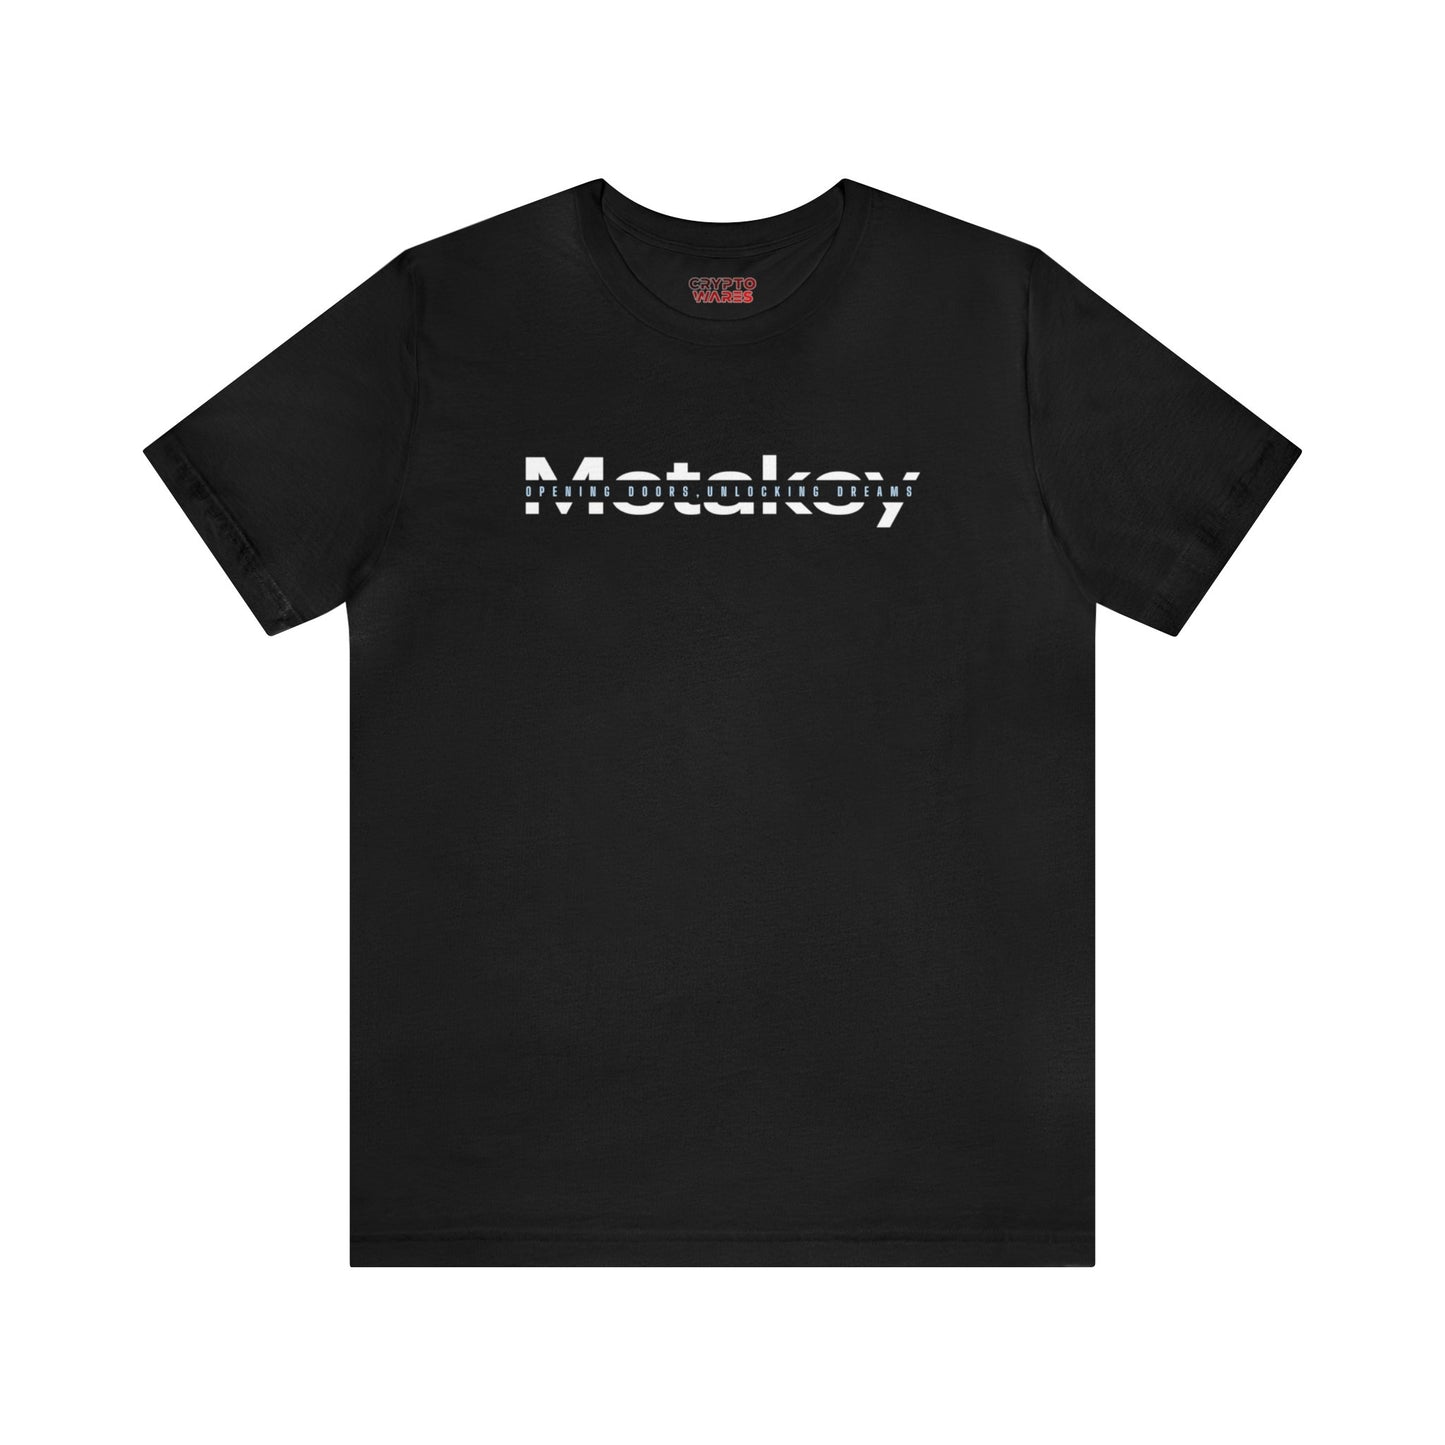 Metakey - Opening Doors, Unlocking Dreams T-Shirt